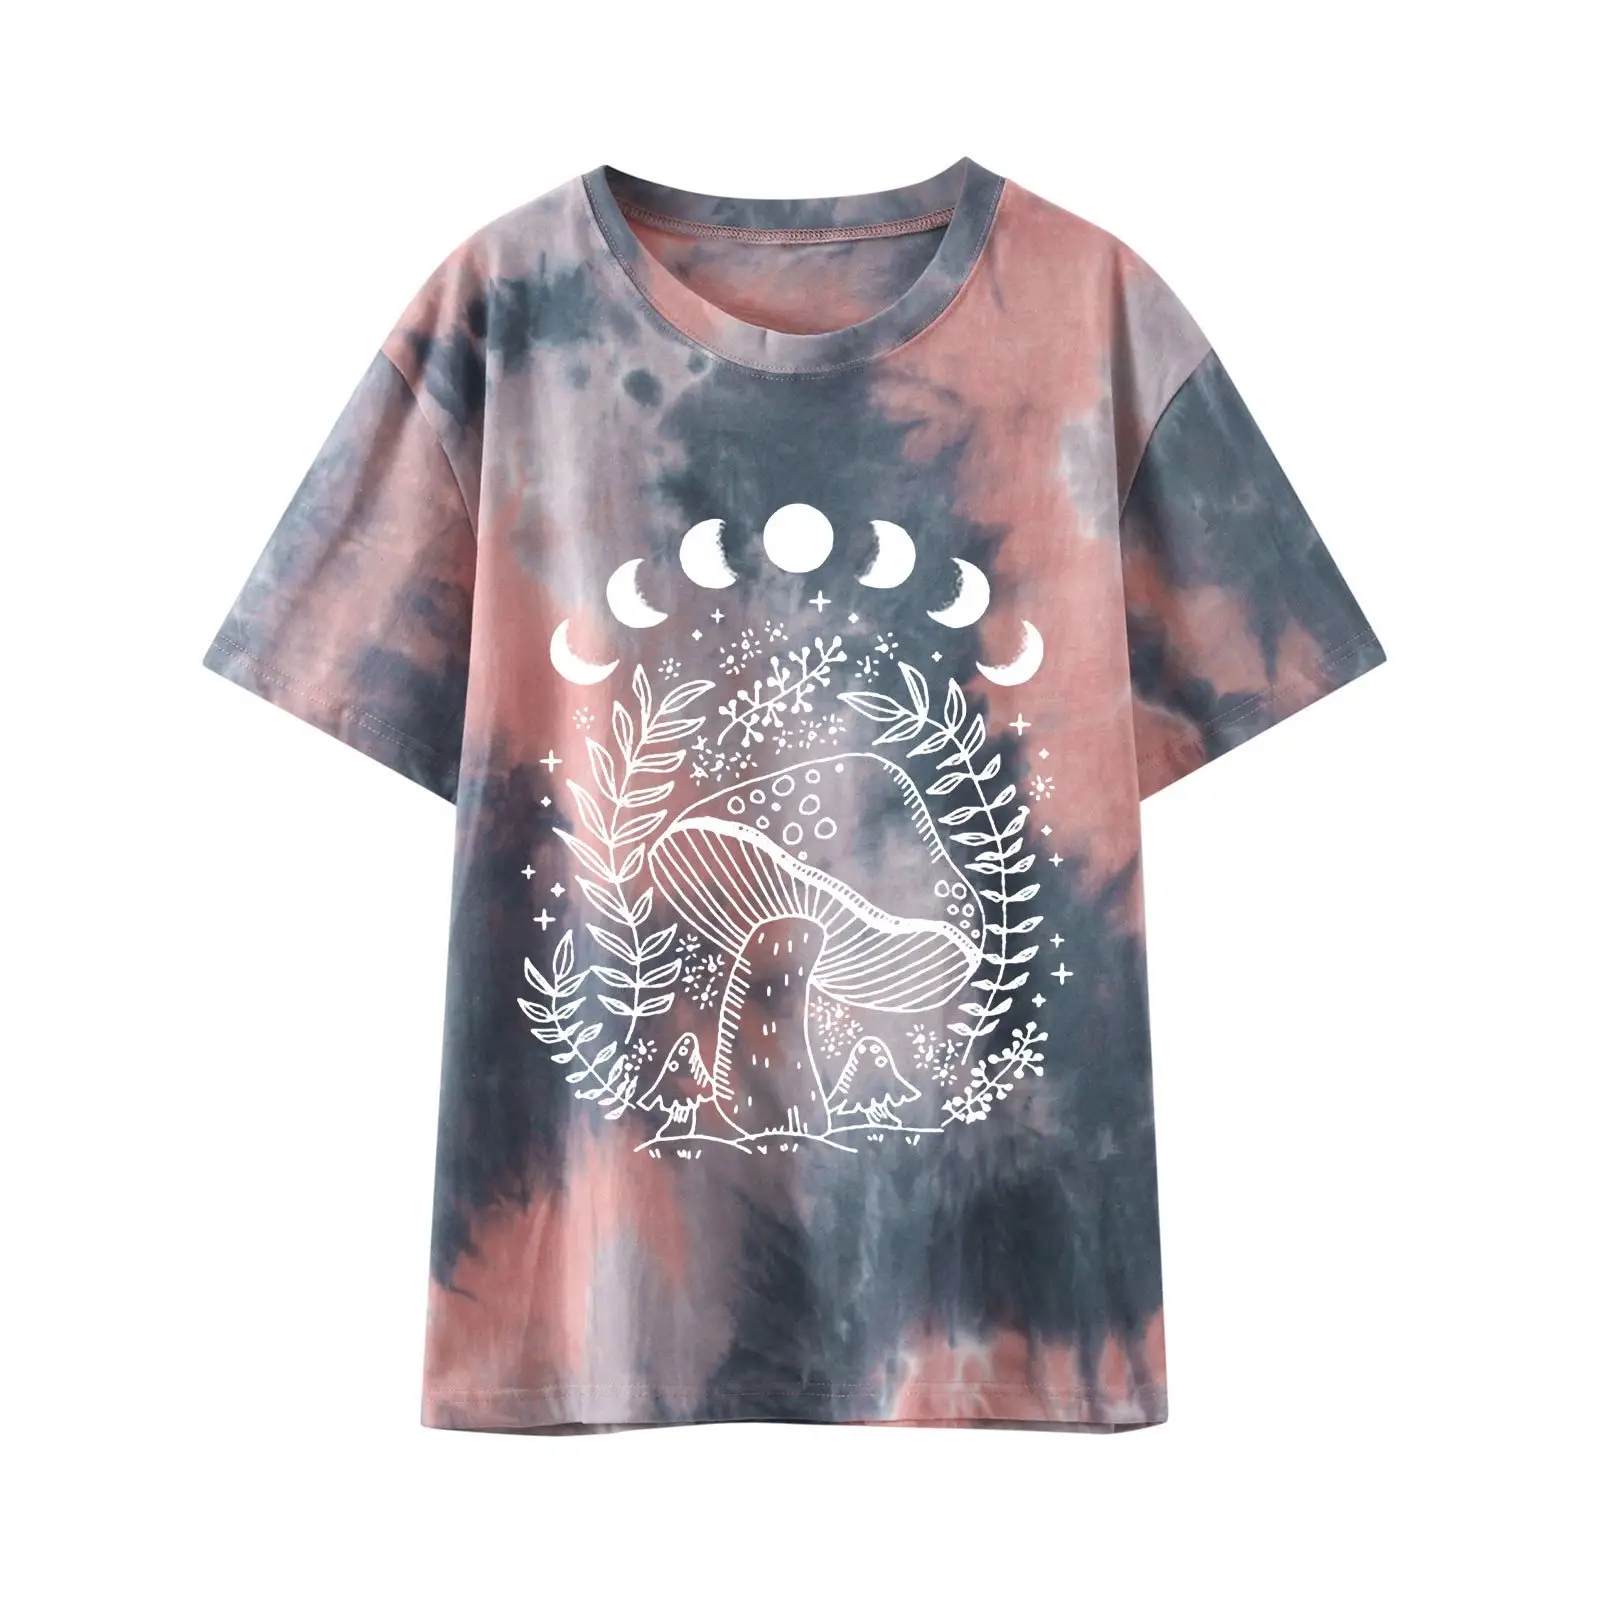 Sun and Moon Tie Dye Tops for Women Mushroom Printed Short Sleeve Shirts Y2k Aesthetic Tees Tops for Teens Girls